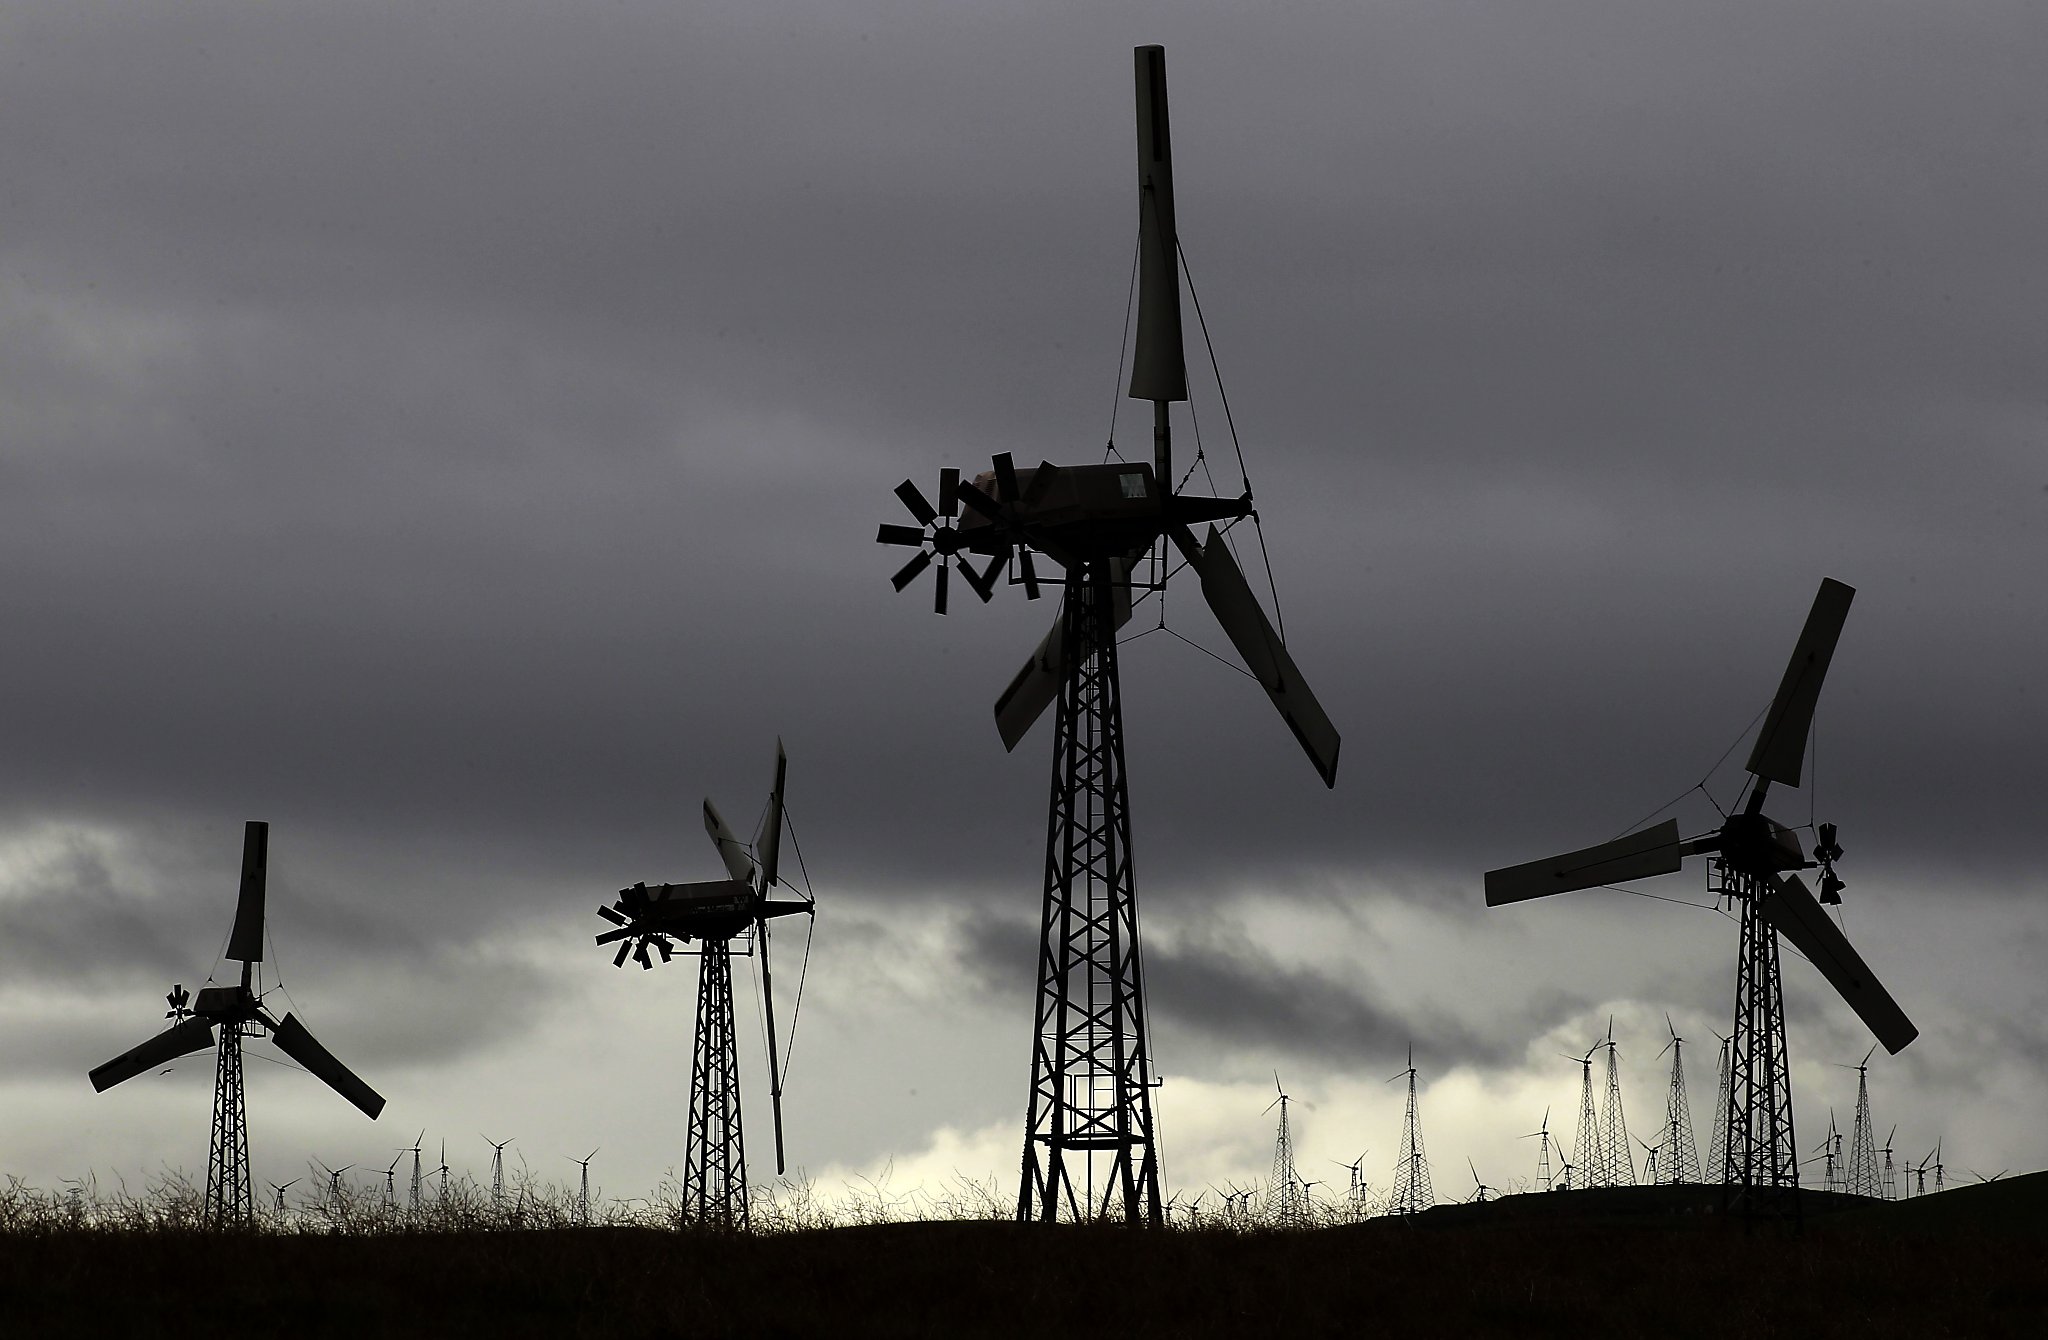 Wind-power company to replace bird-killing Altamont turbines - SFGate